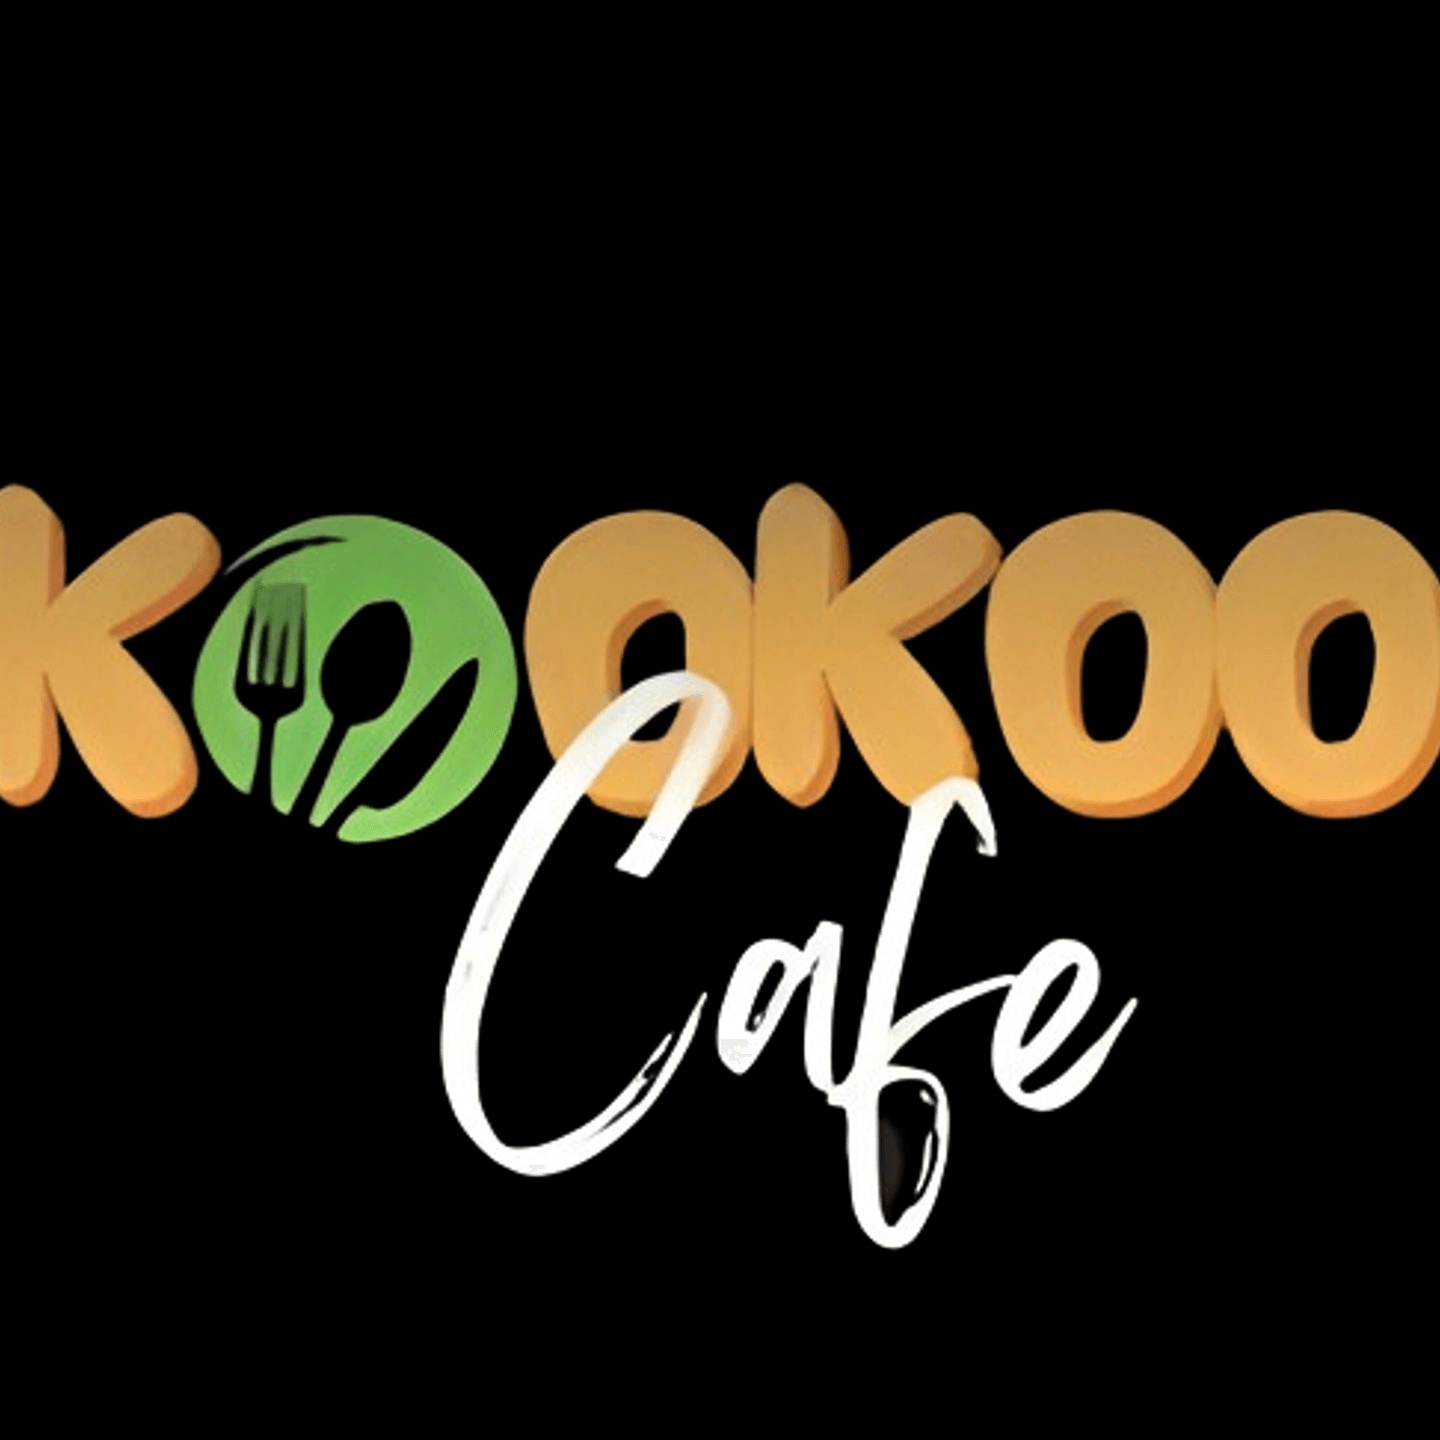 Welcome to Kookoo Cafe!